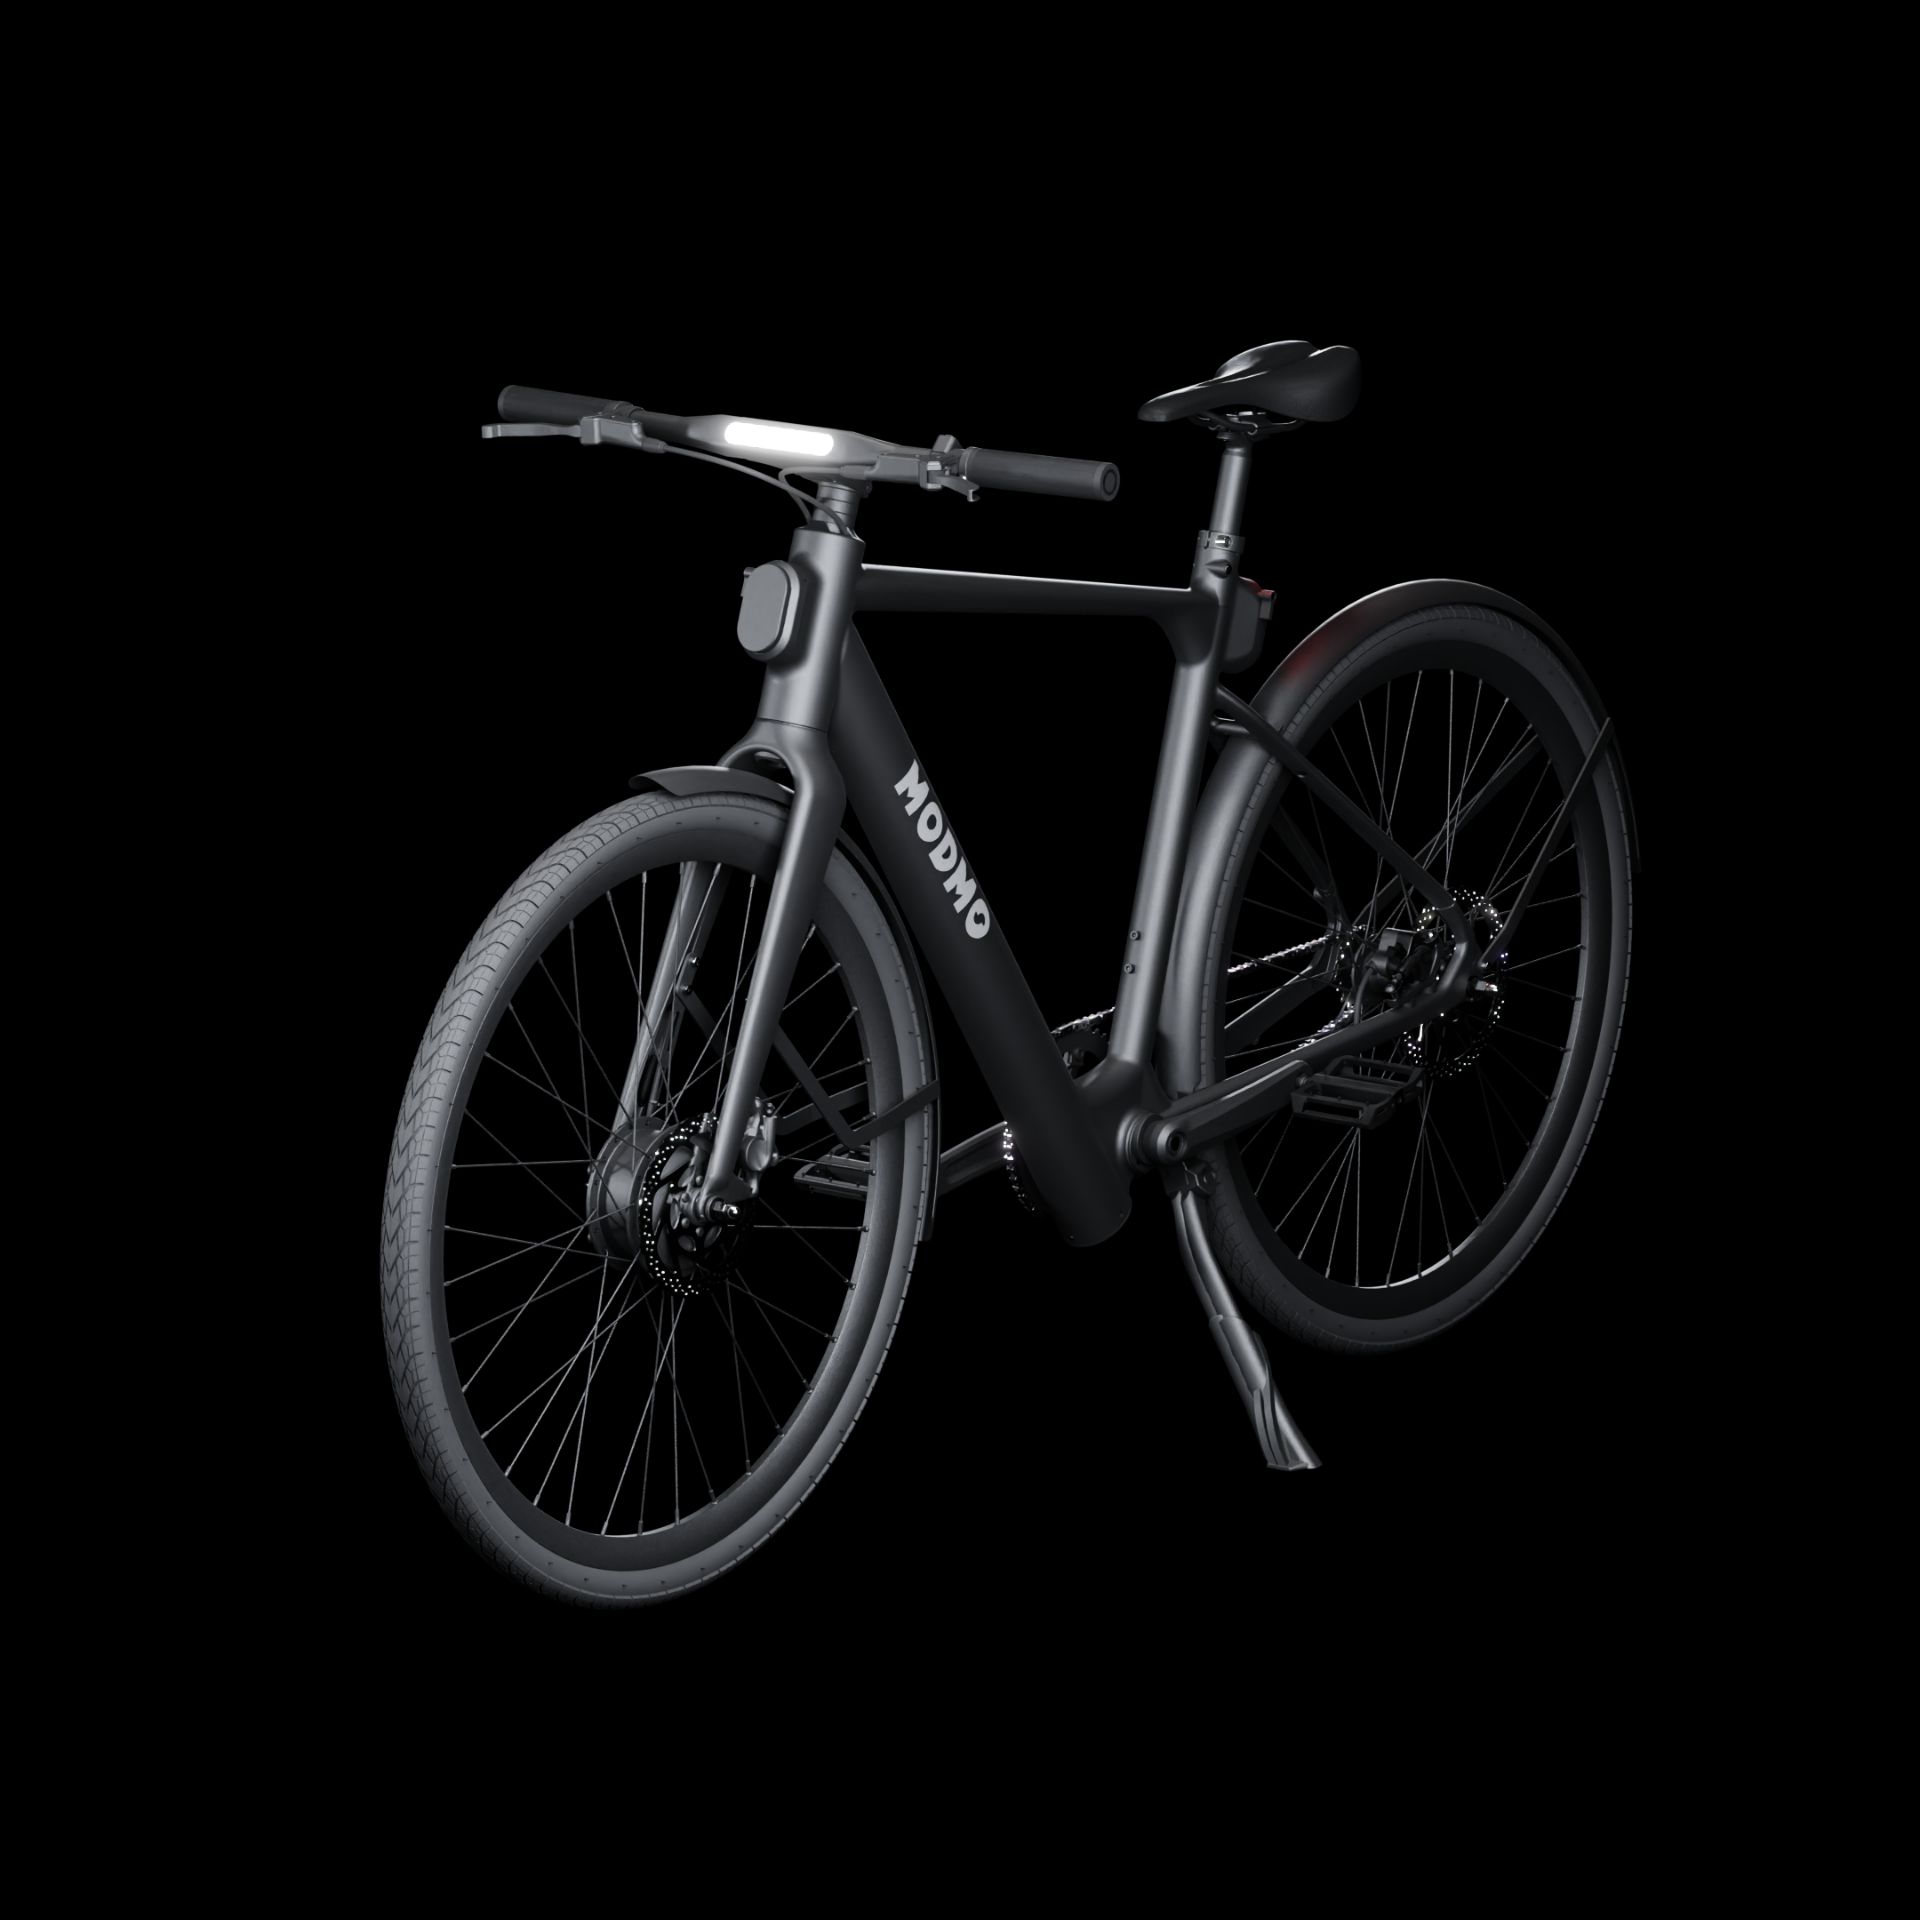 Modmo Saigon+ Electric Bicycle - RRP £2800 - Size M (Rider: 140-155cm) - Image 9 of 14